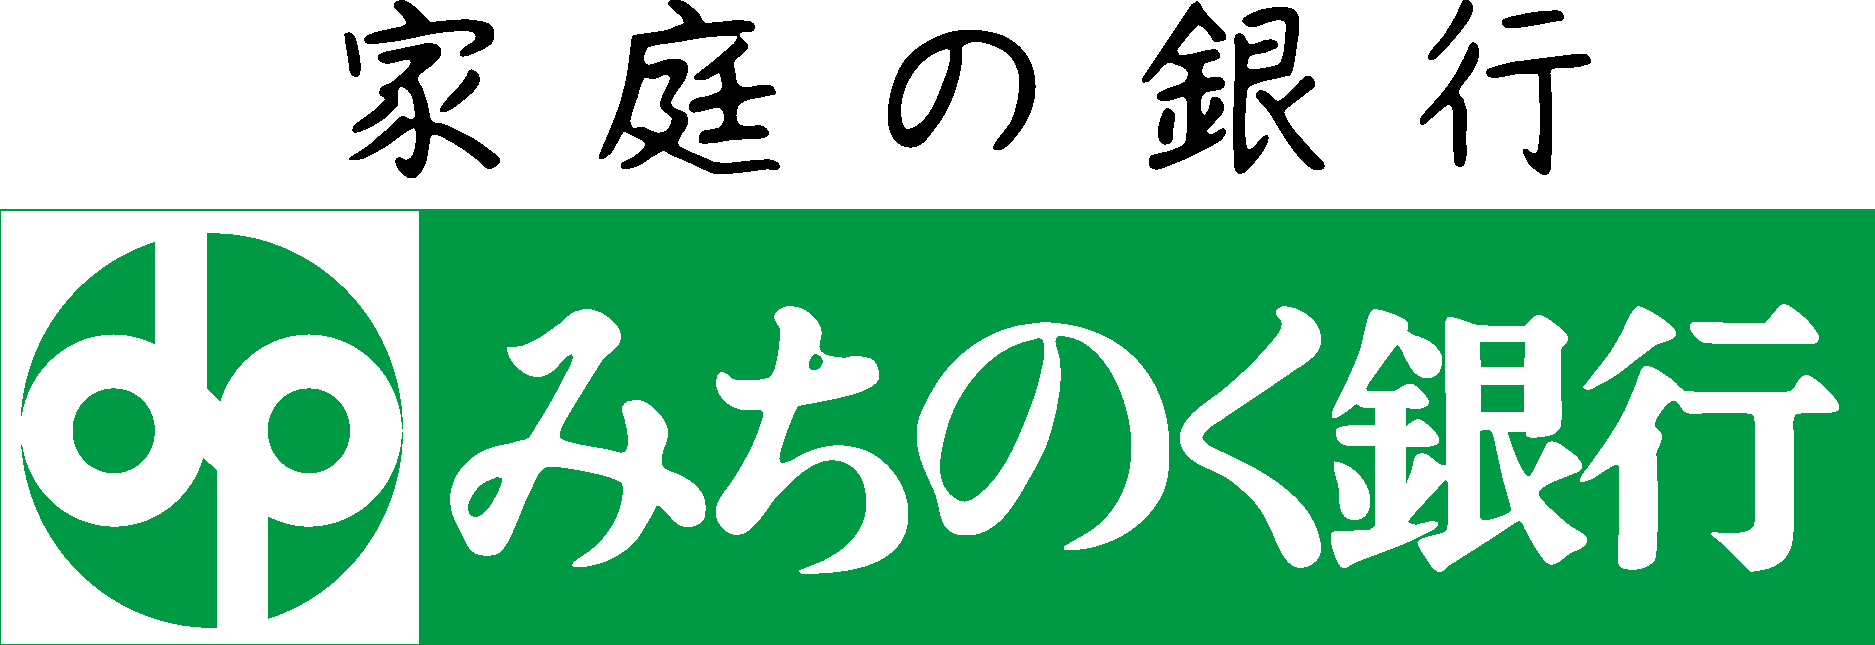 Michinoku Bank Logo Vector